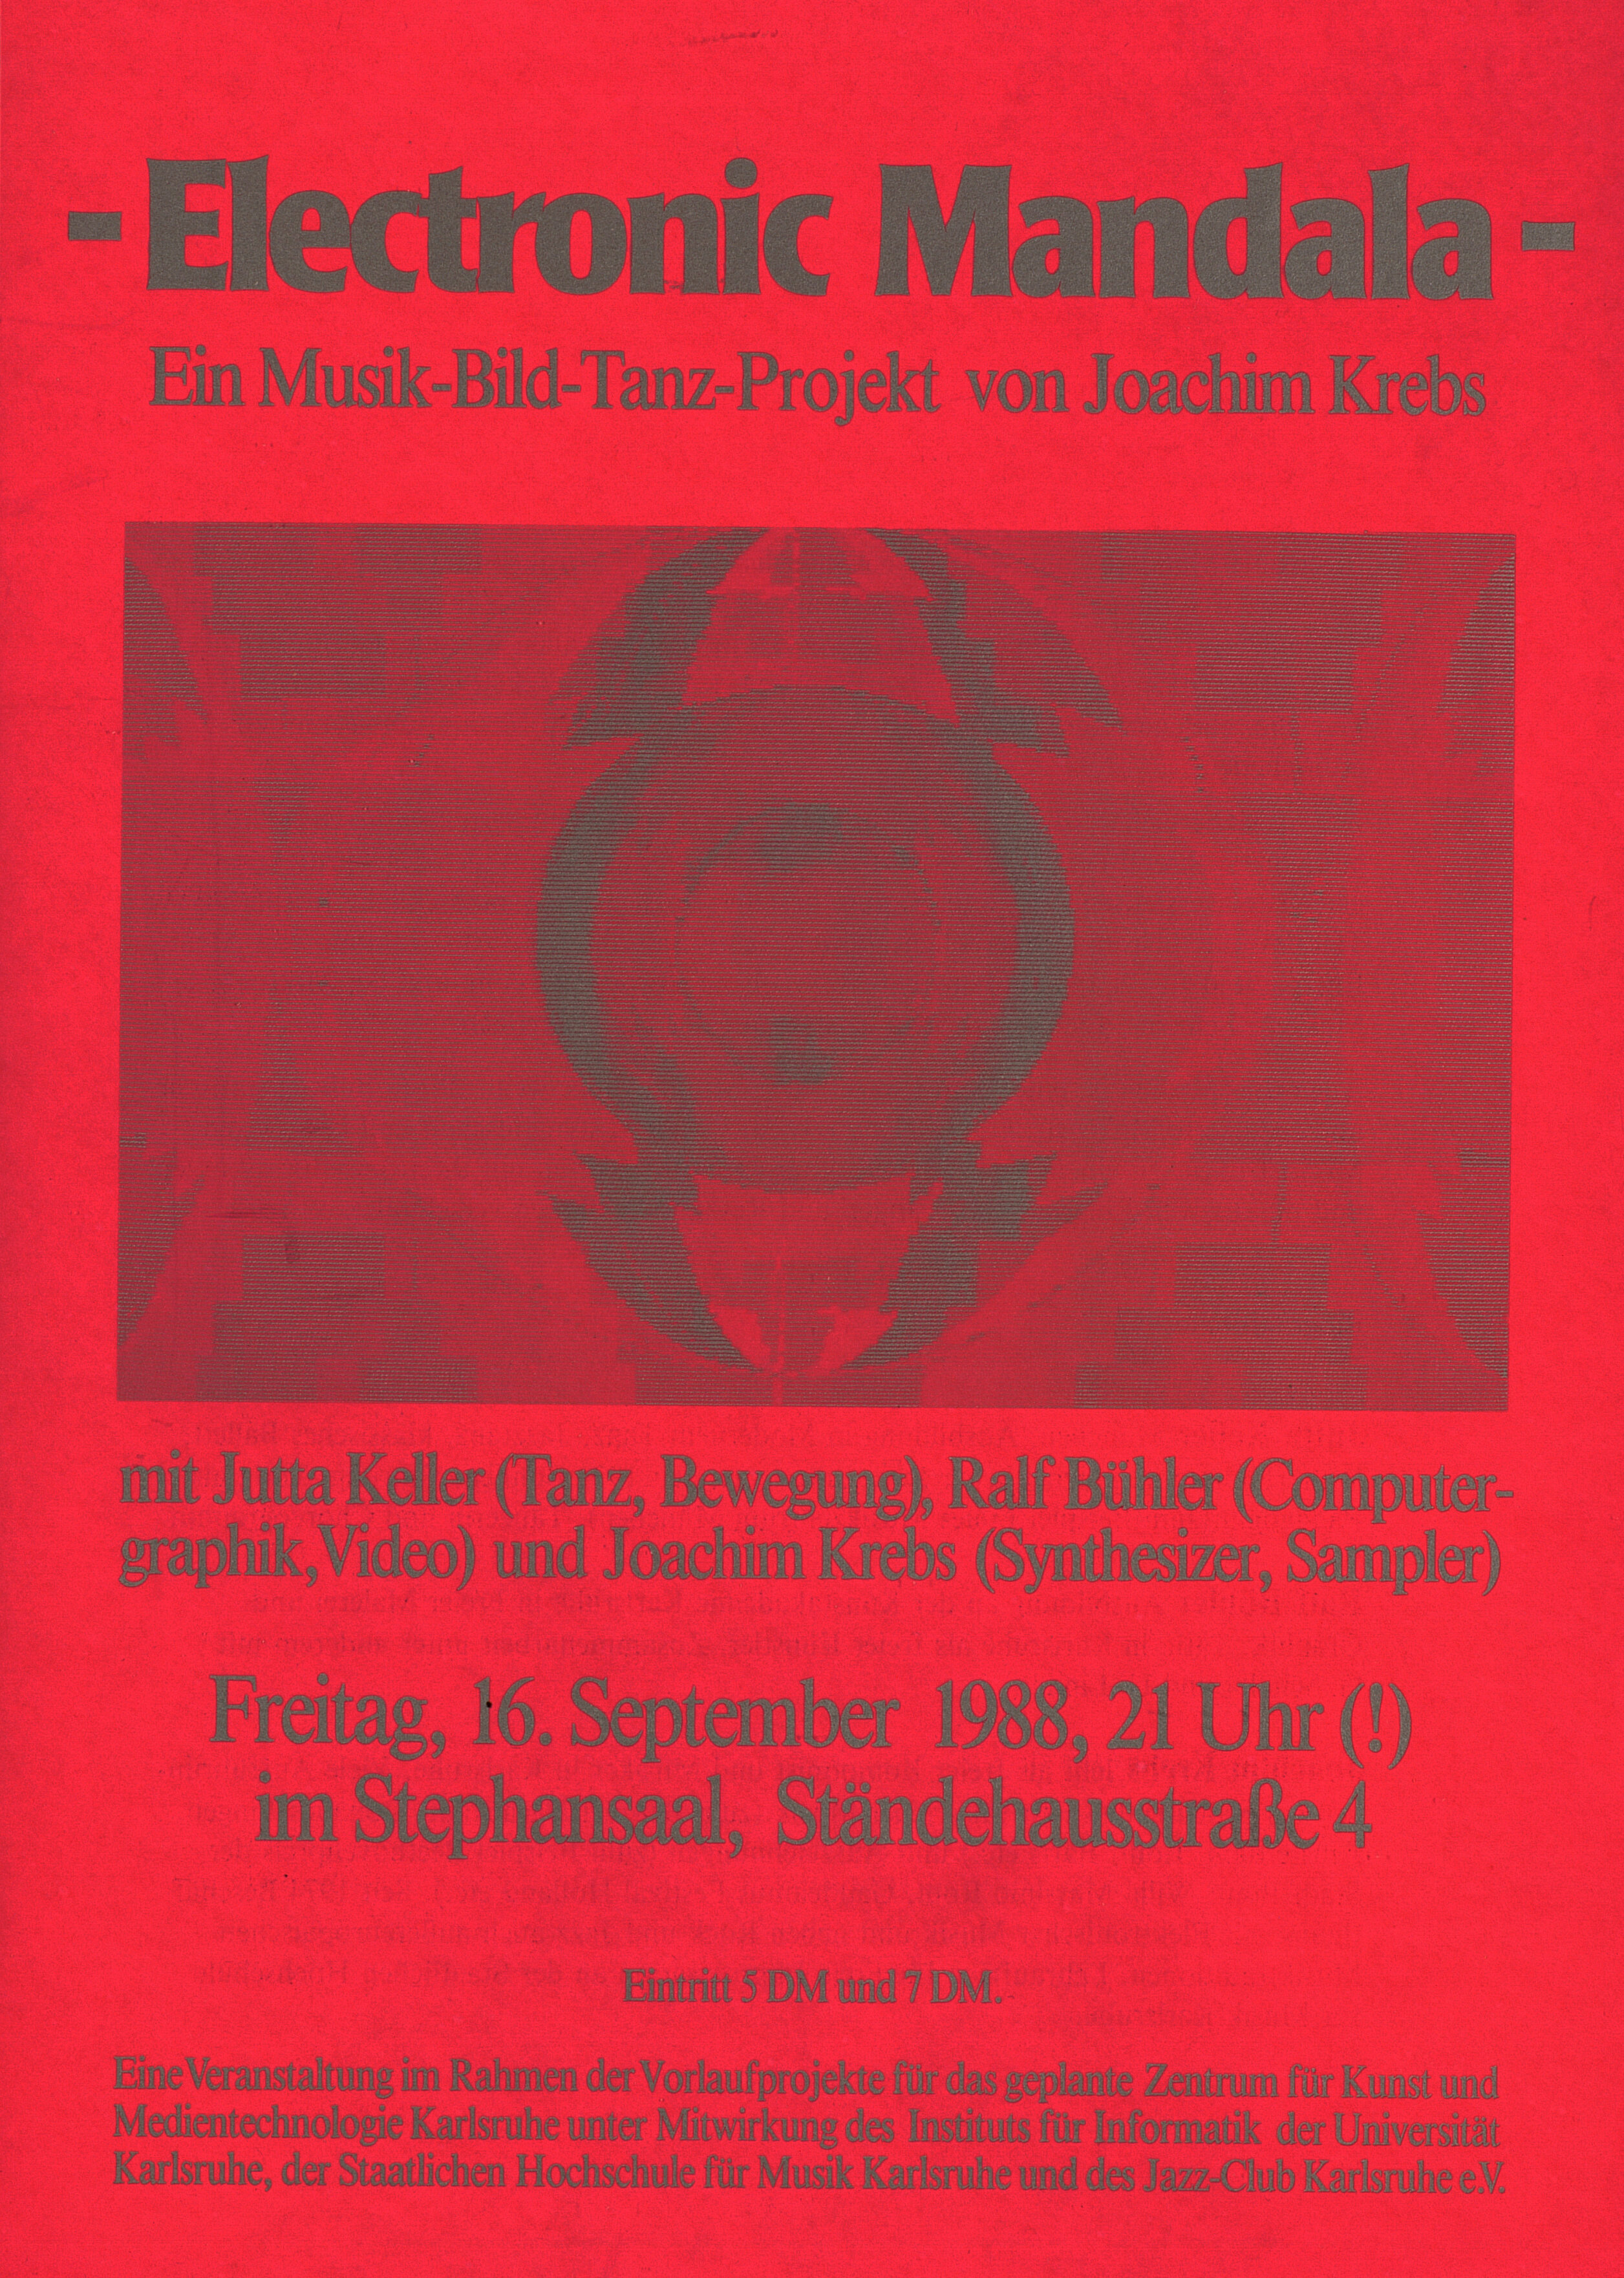 Plakat zu Electronic Mandala, Musik-Bild-Tanz-Projekt von Joachim Krebs